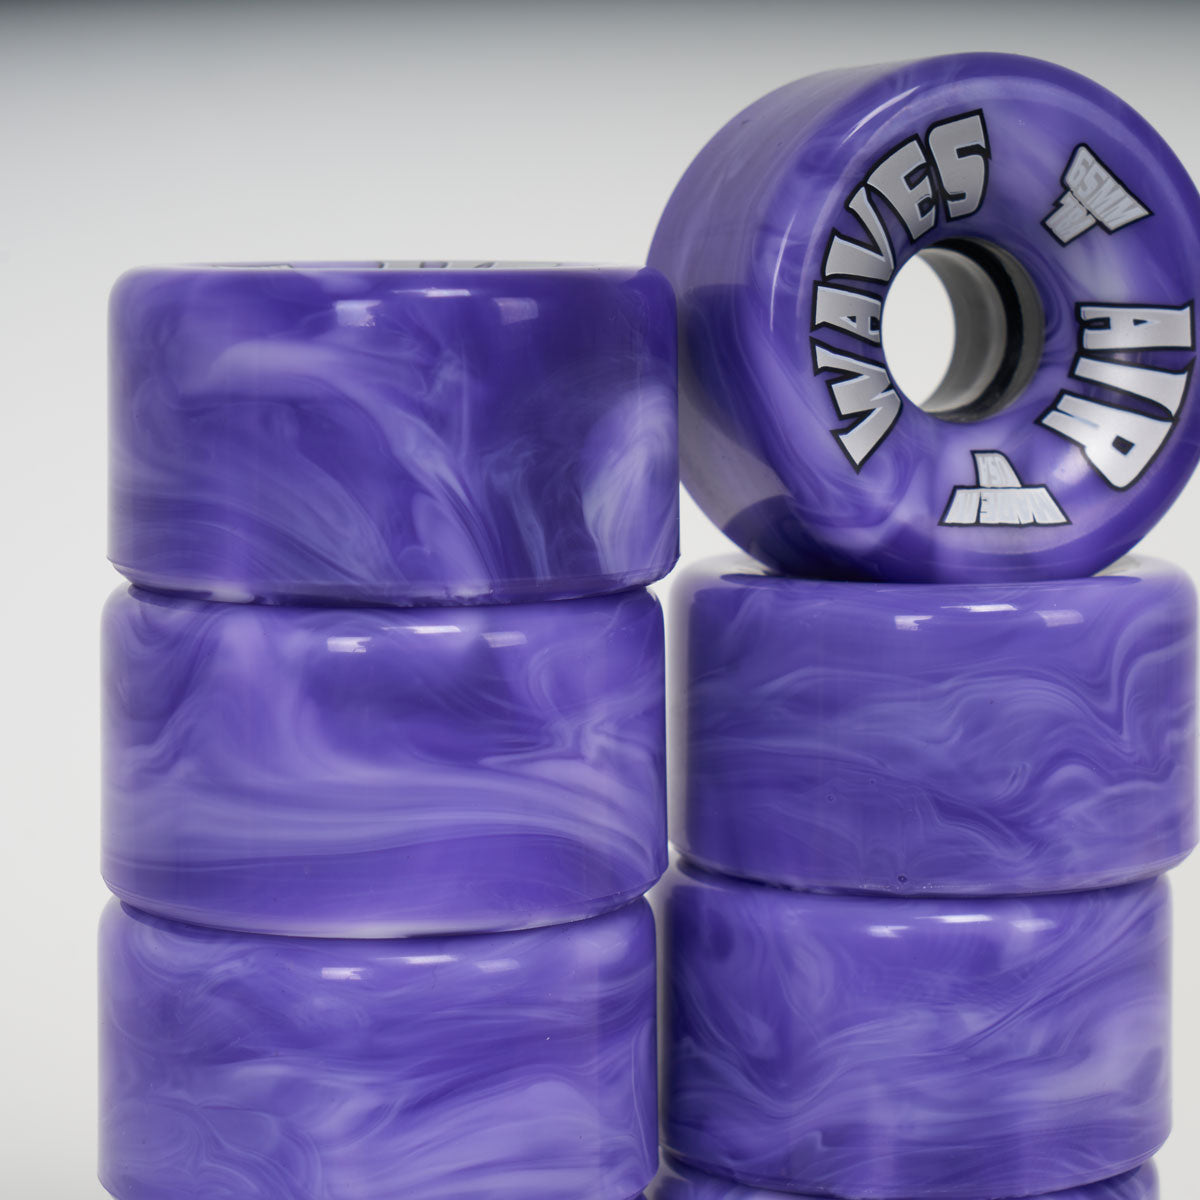 Airwaves 65mm/78a Wheels - Purple/White Marble